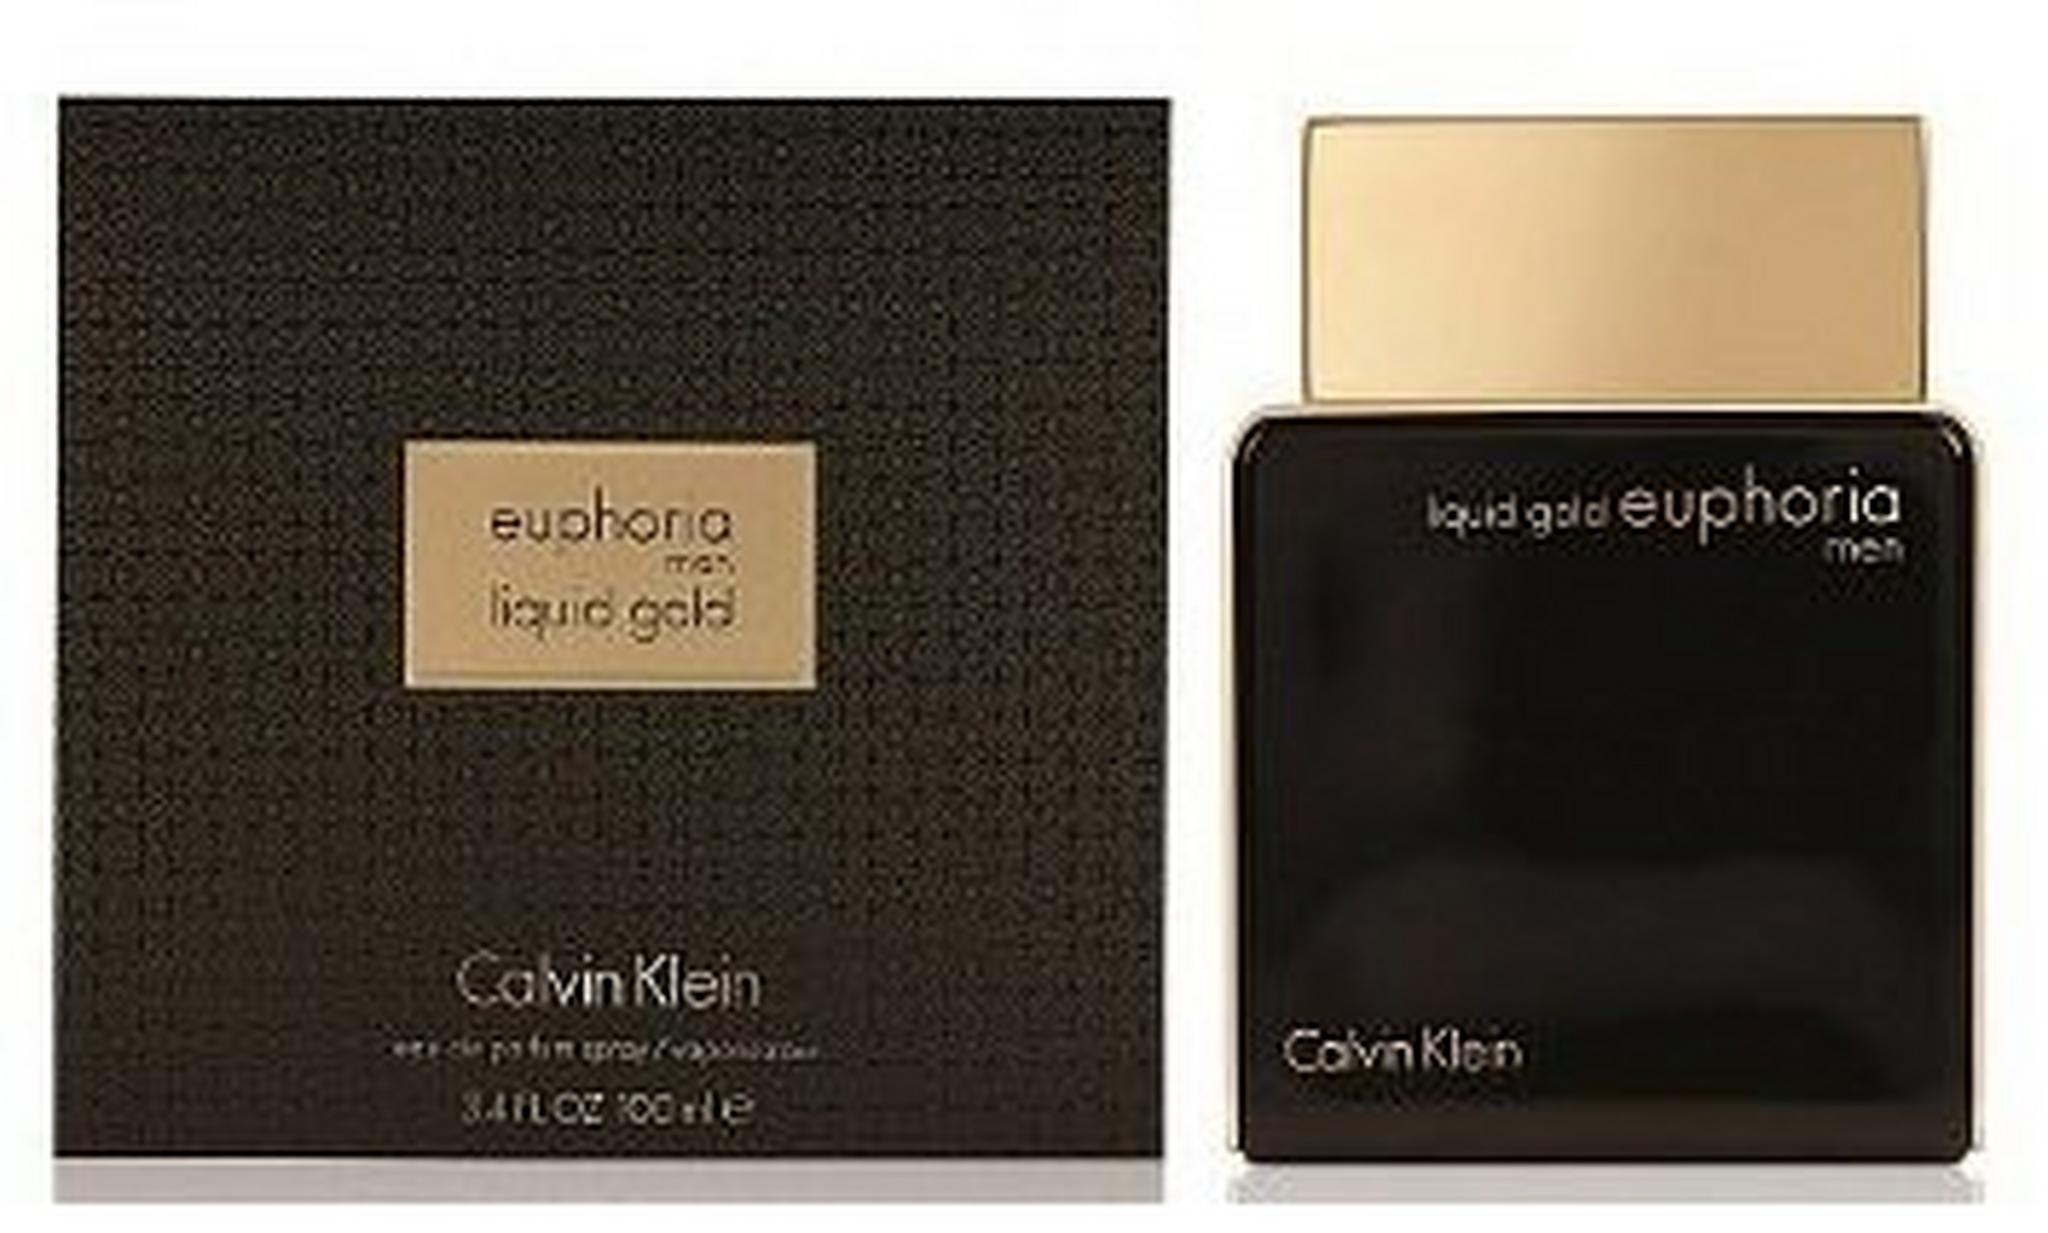 Calvin Klein Liquid Gold Euphoria Perfume for Men 100ml